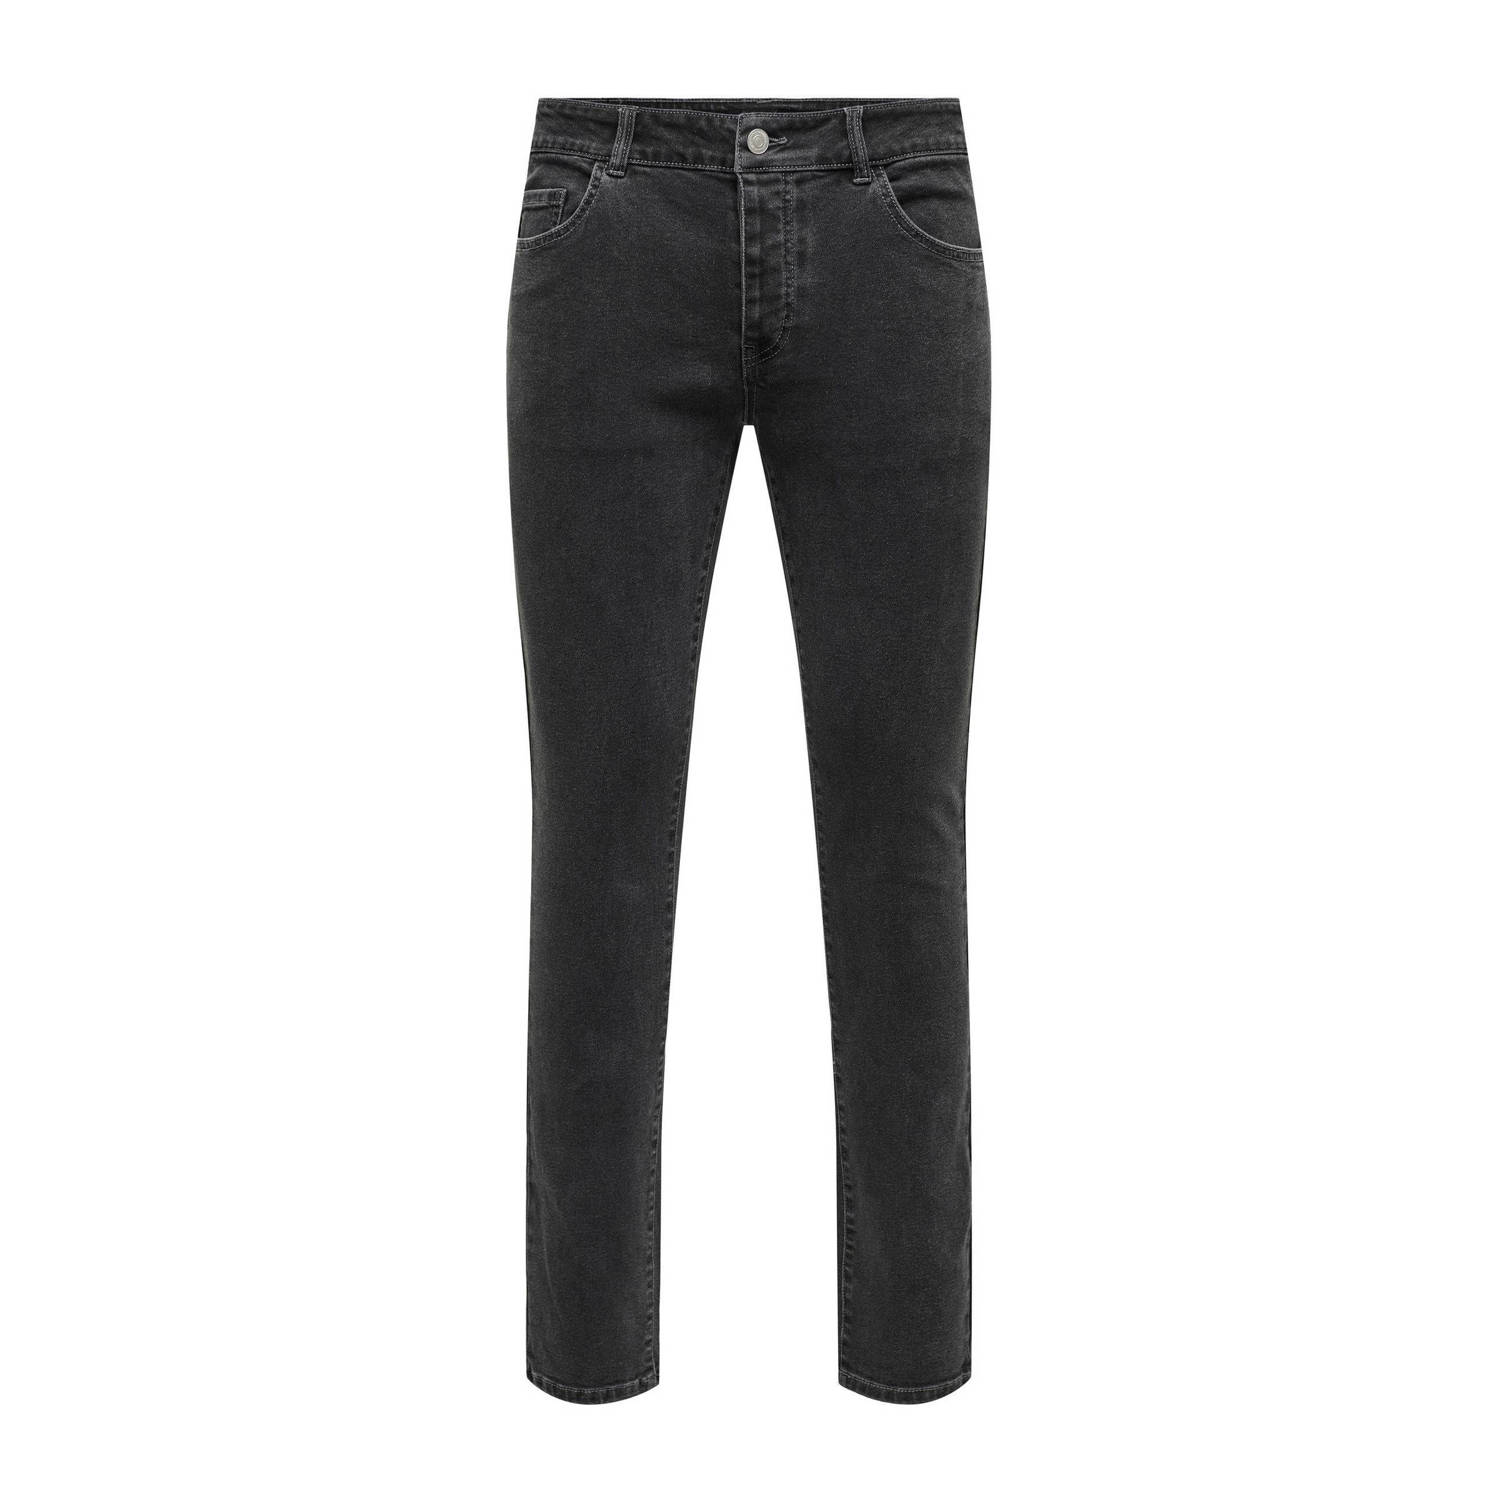 ONLY & SONS skinny jeans ONSWARP 7987 medium grey denim